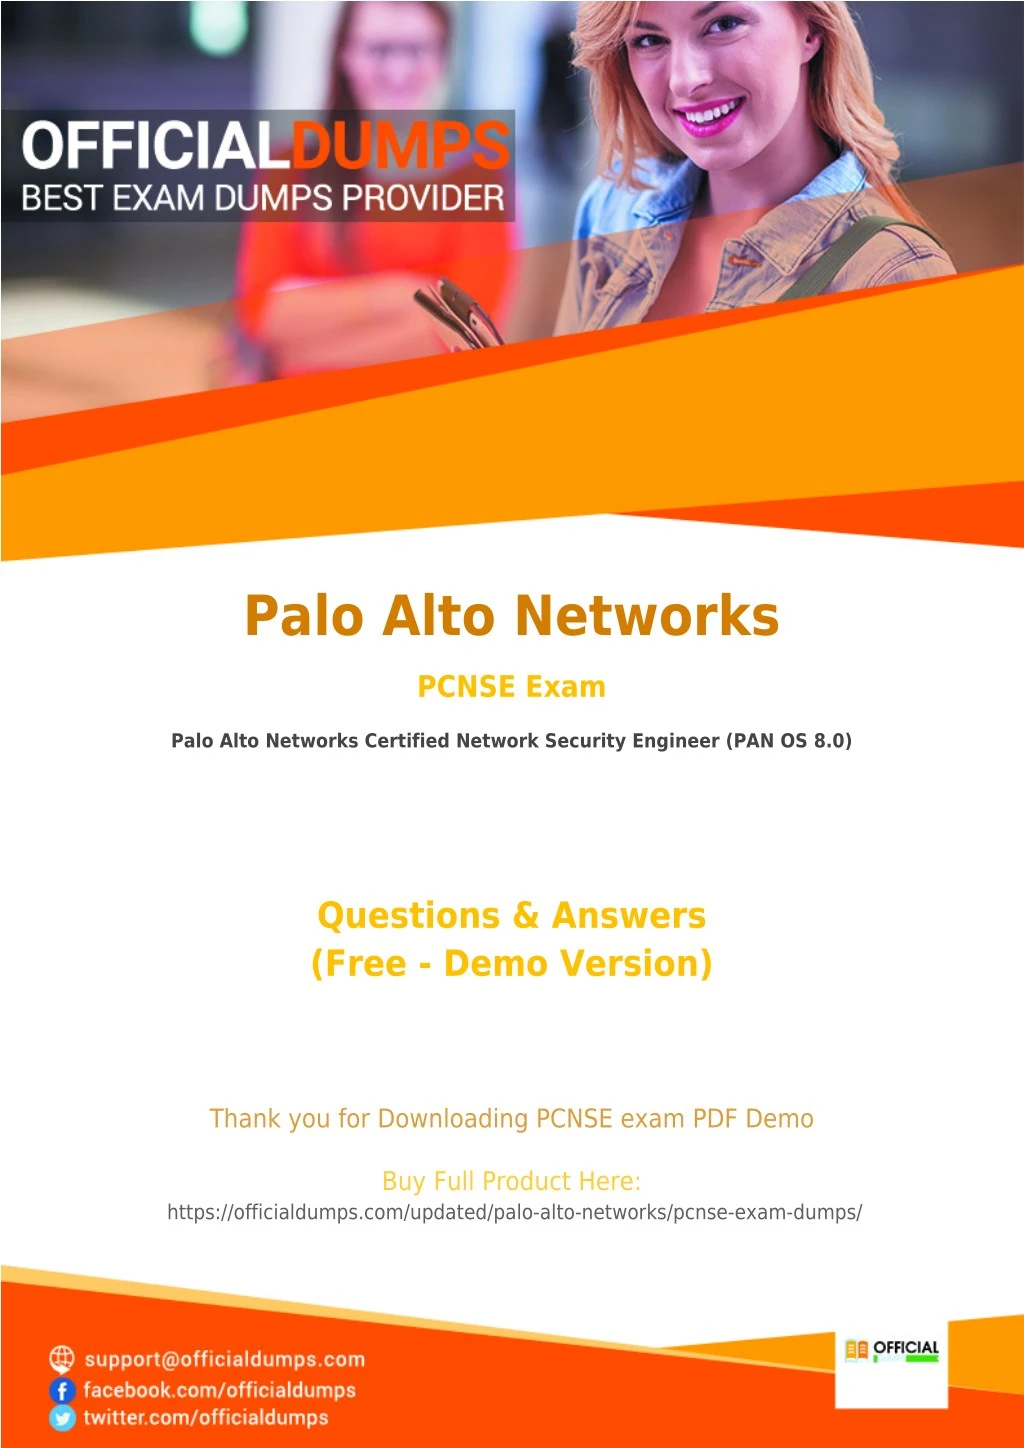 palo alto networks